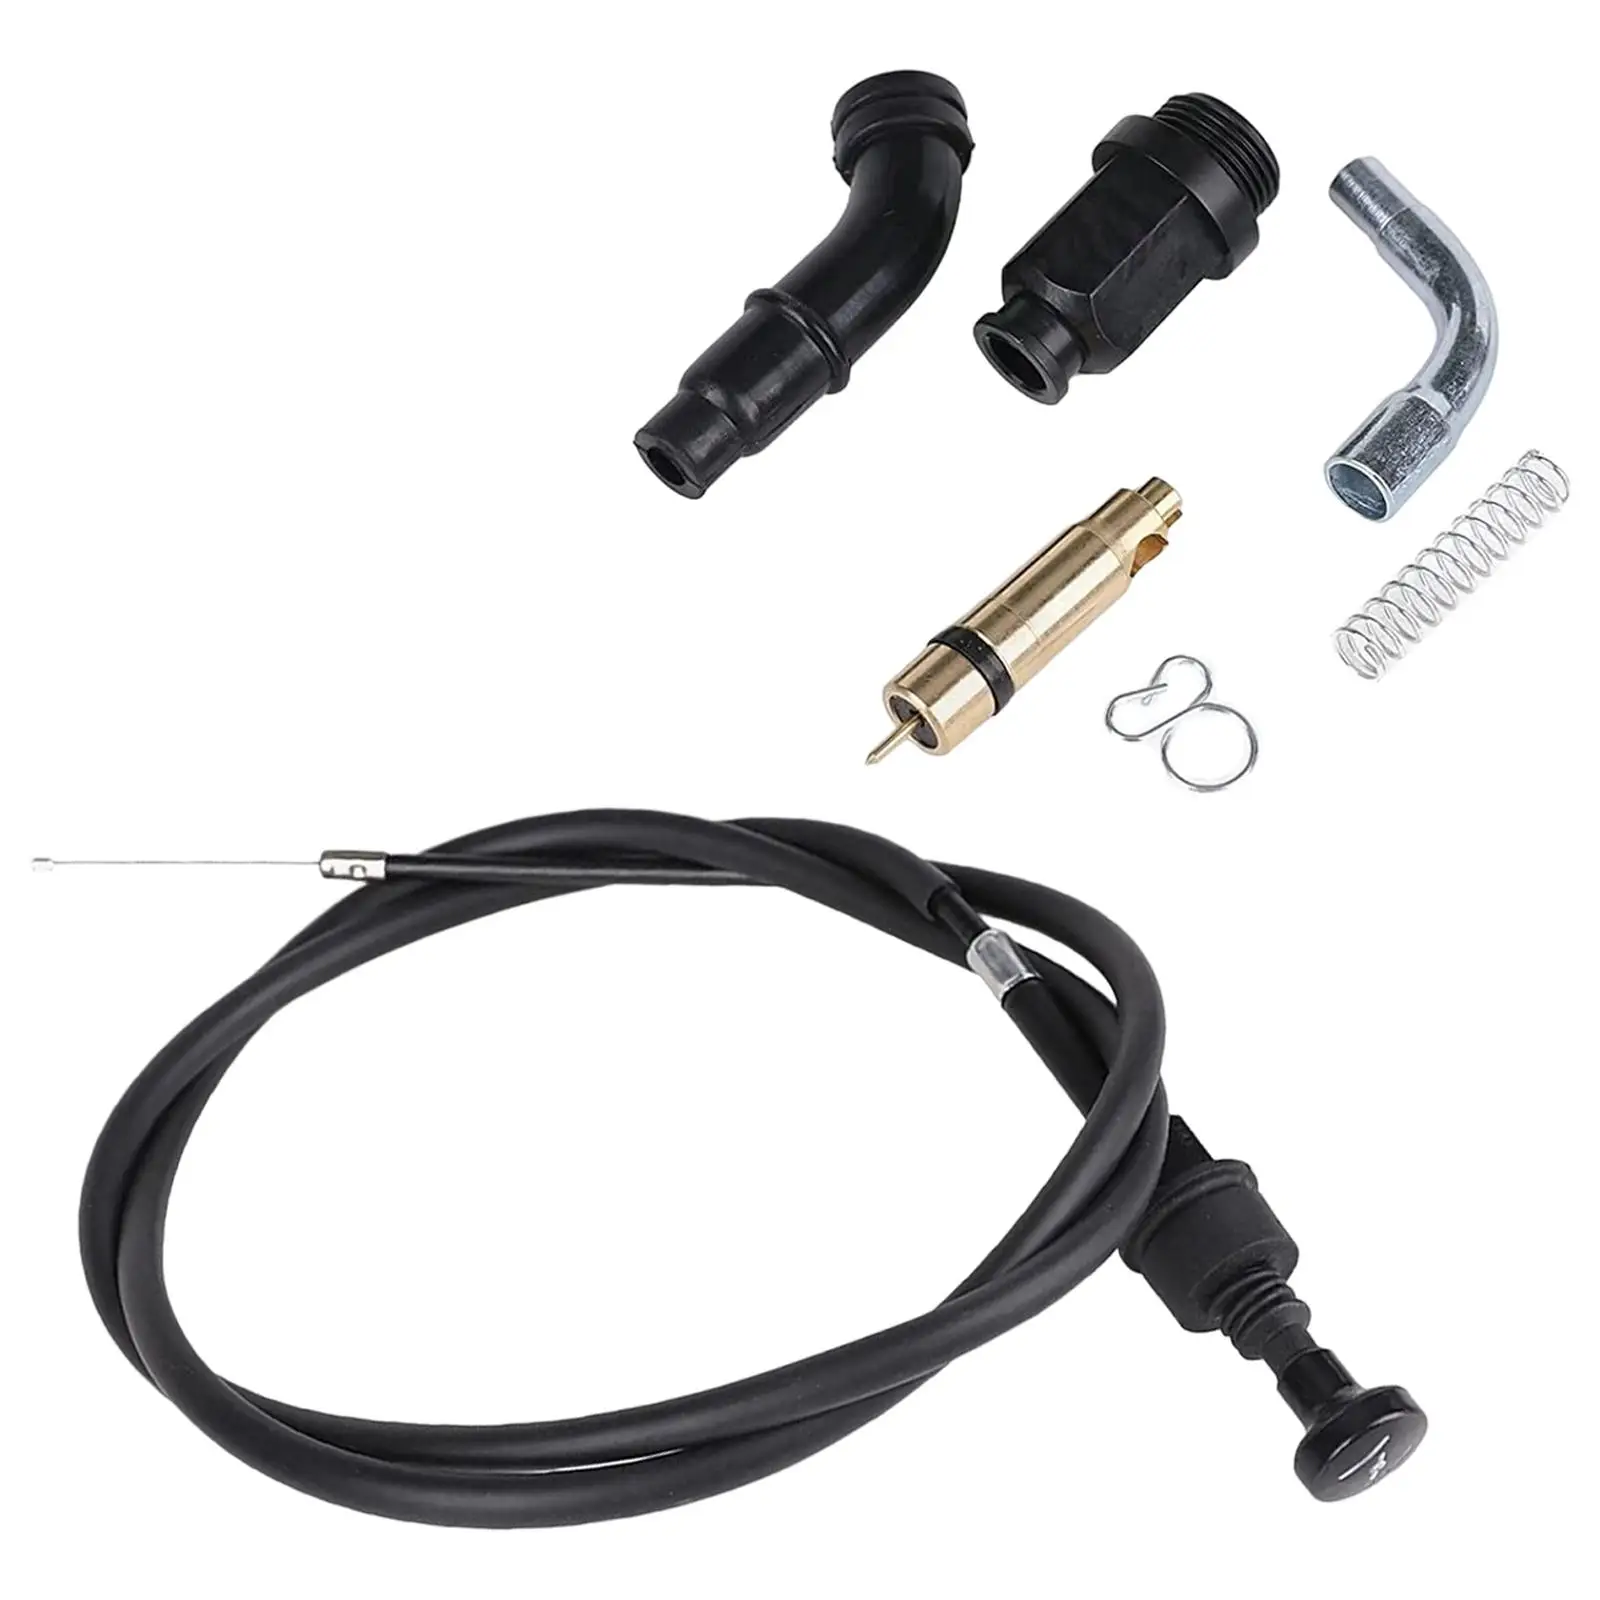 

Motorcycle Choke Cable Starter Valve Plunger Kit Replacement Rebuild Carburetor Carb Repair Kit for Honda Rancher 350